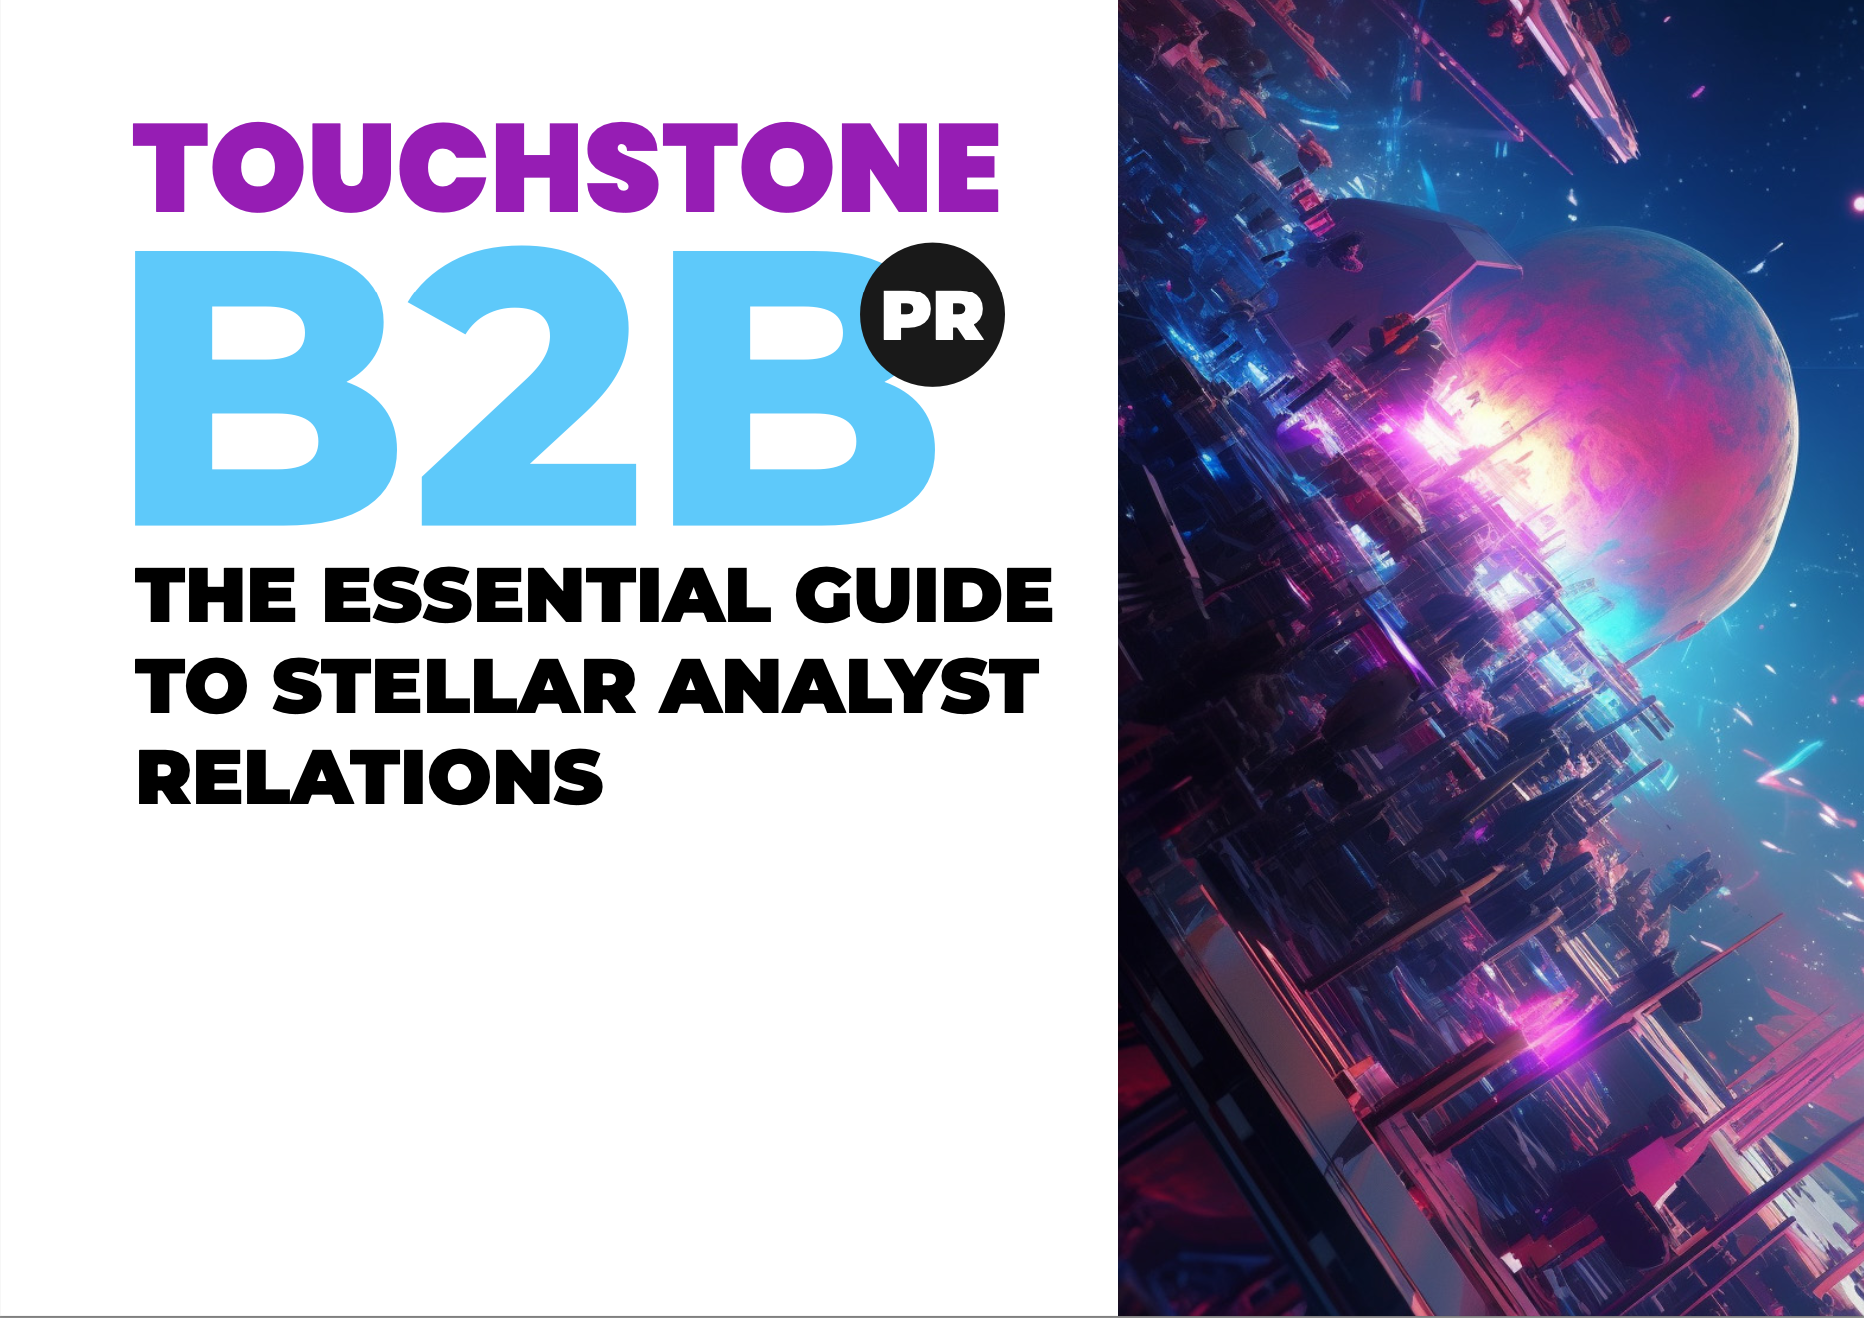 TOUCHSTONE B2B PR - The Essential Guide to Stellar Analyst Relations